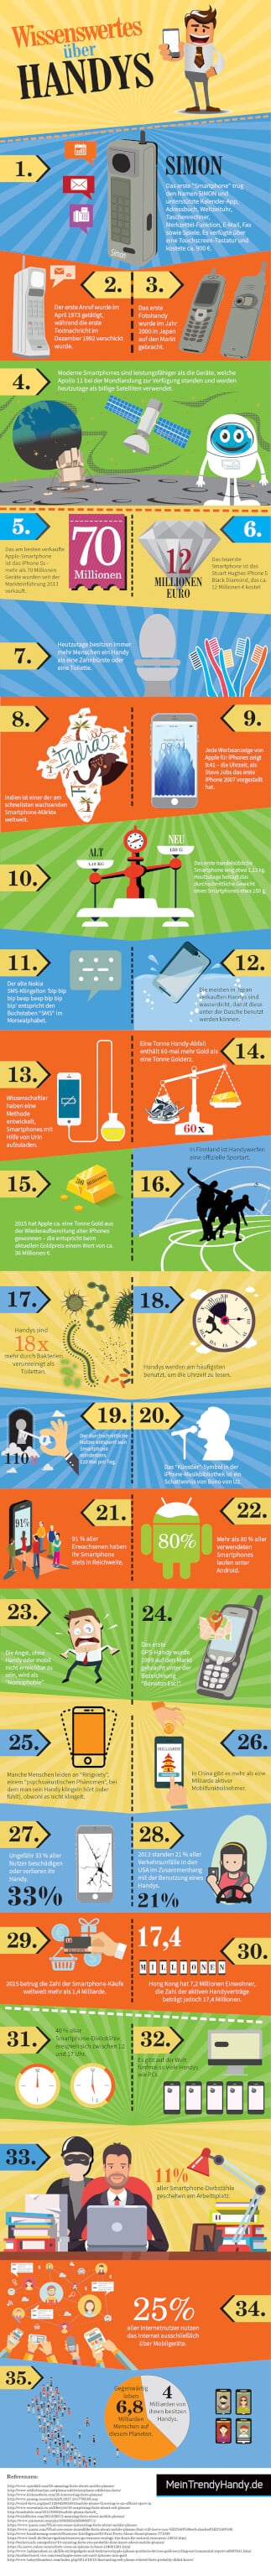 Infografik: Fun-Facts über Handys, Bild: MeinTrendyHandy